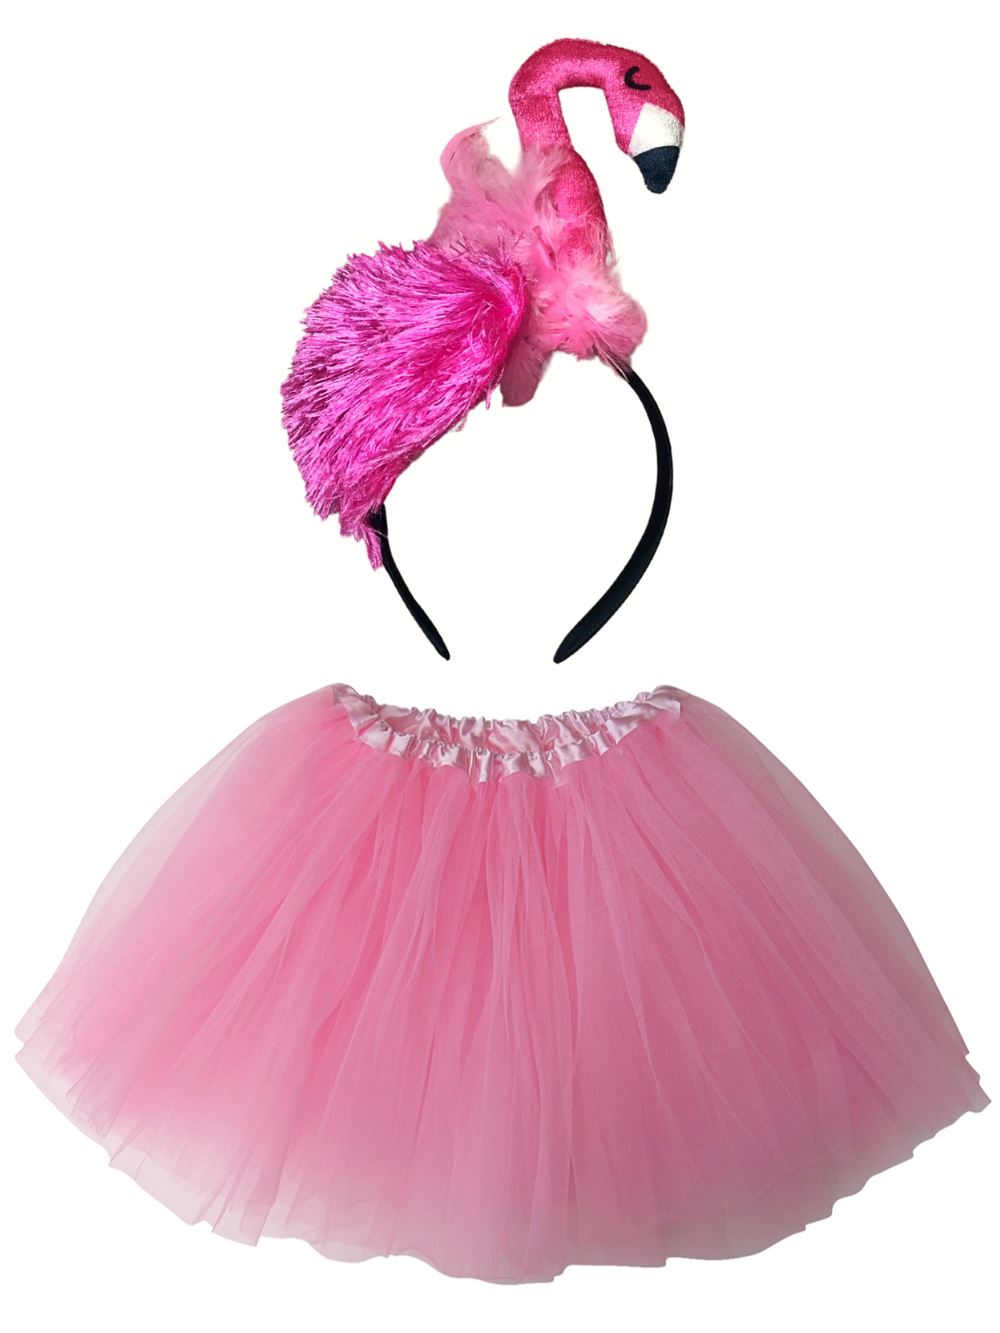 Flamingo Costume Pink - Complete Kids Costume Set with Tutu and Headband - Sydney So Sweet